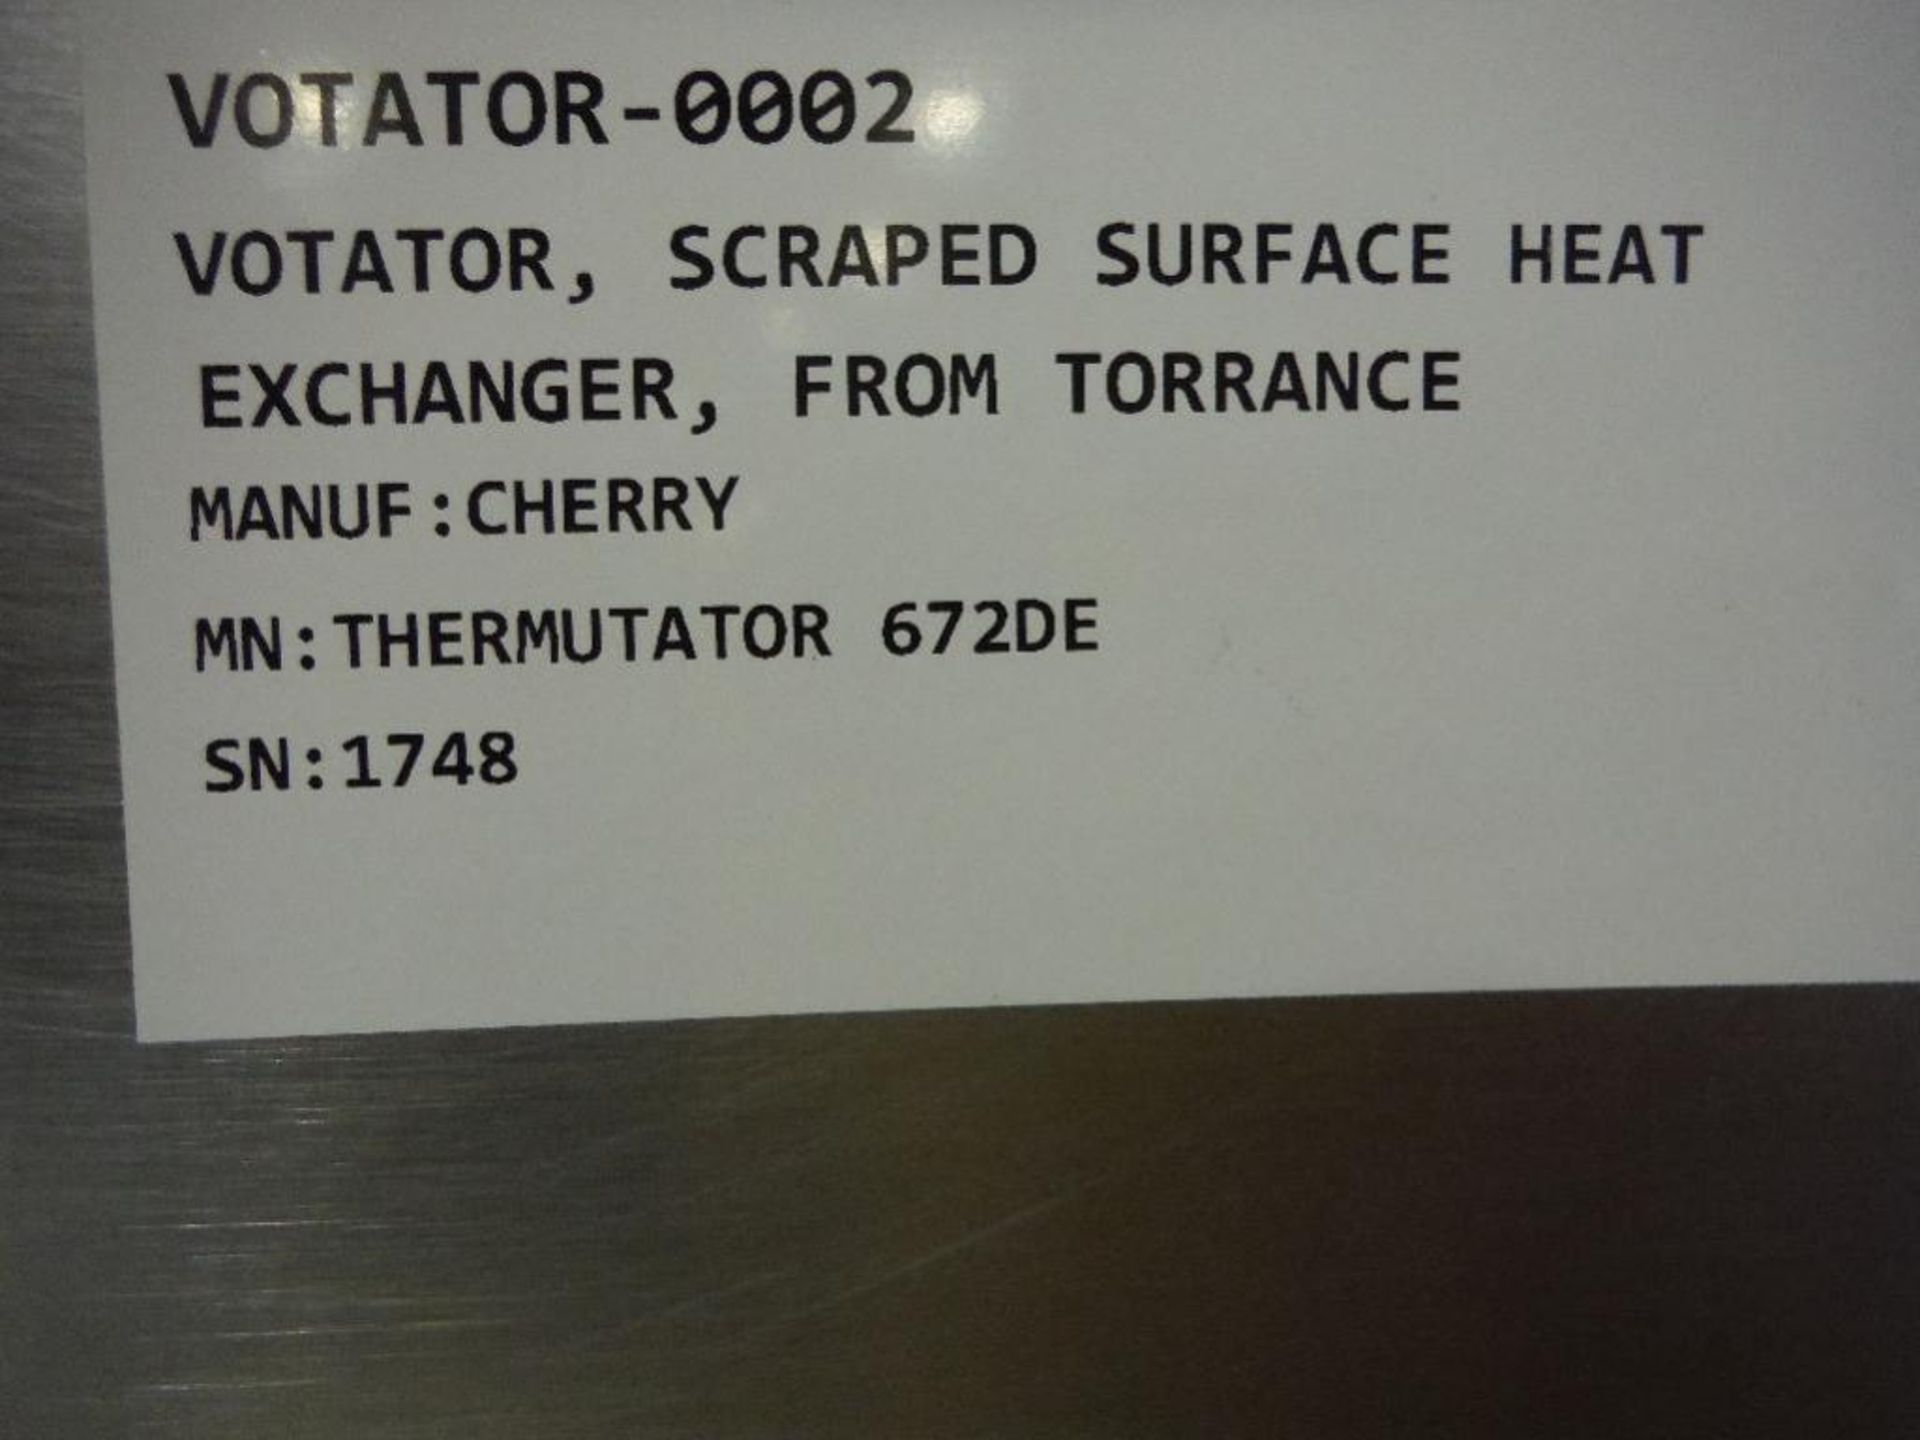 Cherry Burrell thermutator, 3 barrel scraped surface heat exchanger, Model 672DE, SN 1748, barrel 74 - Image 7 of 7